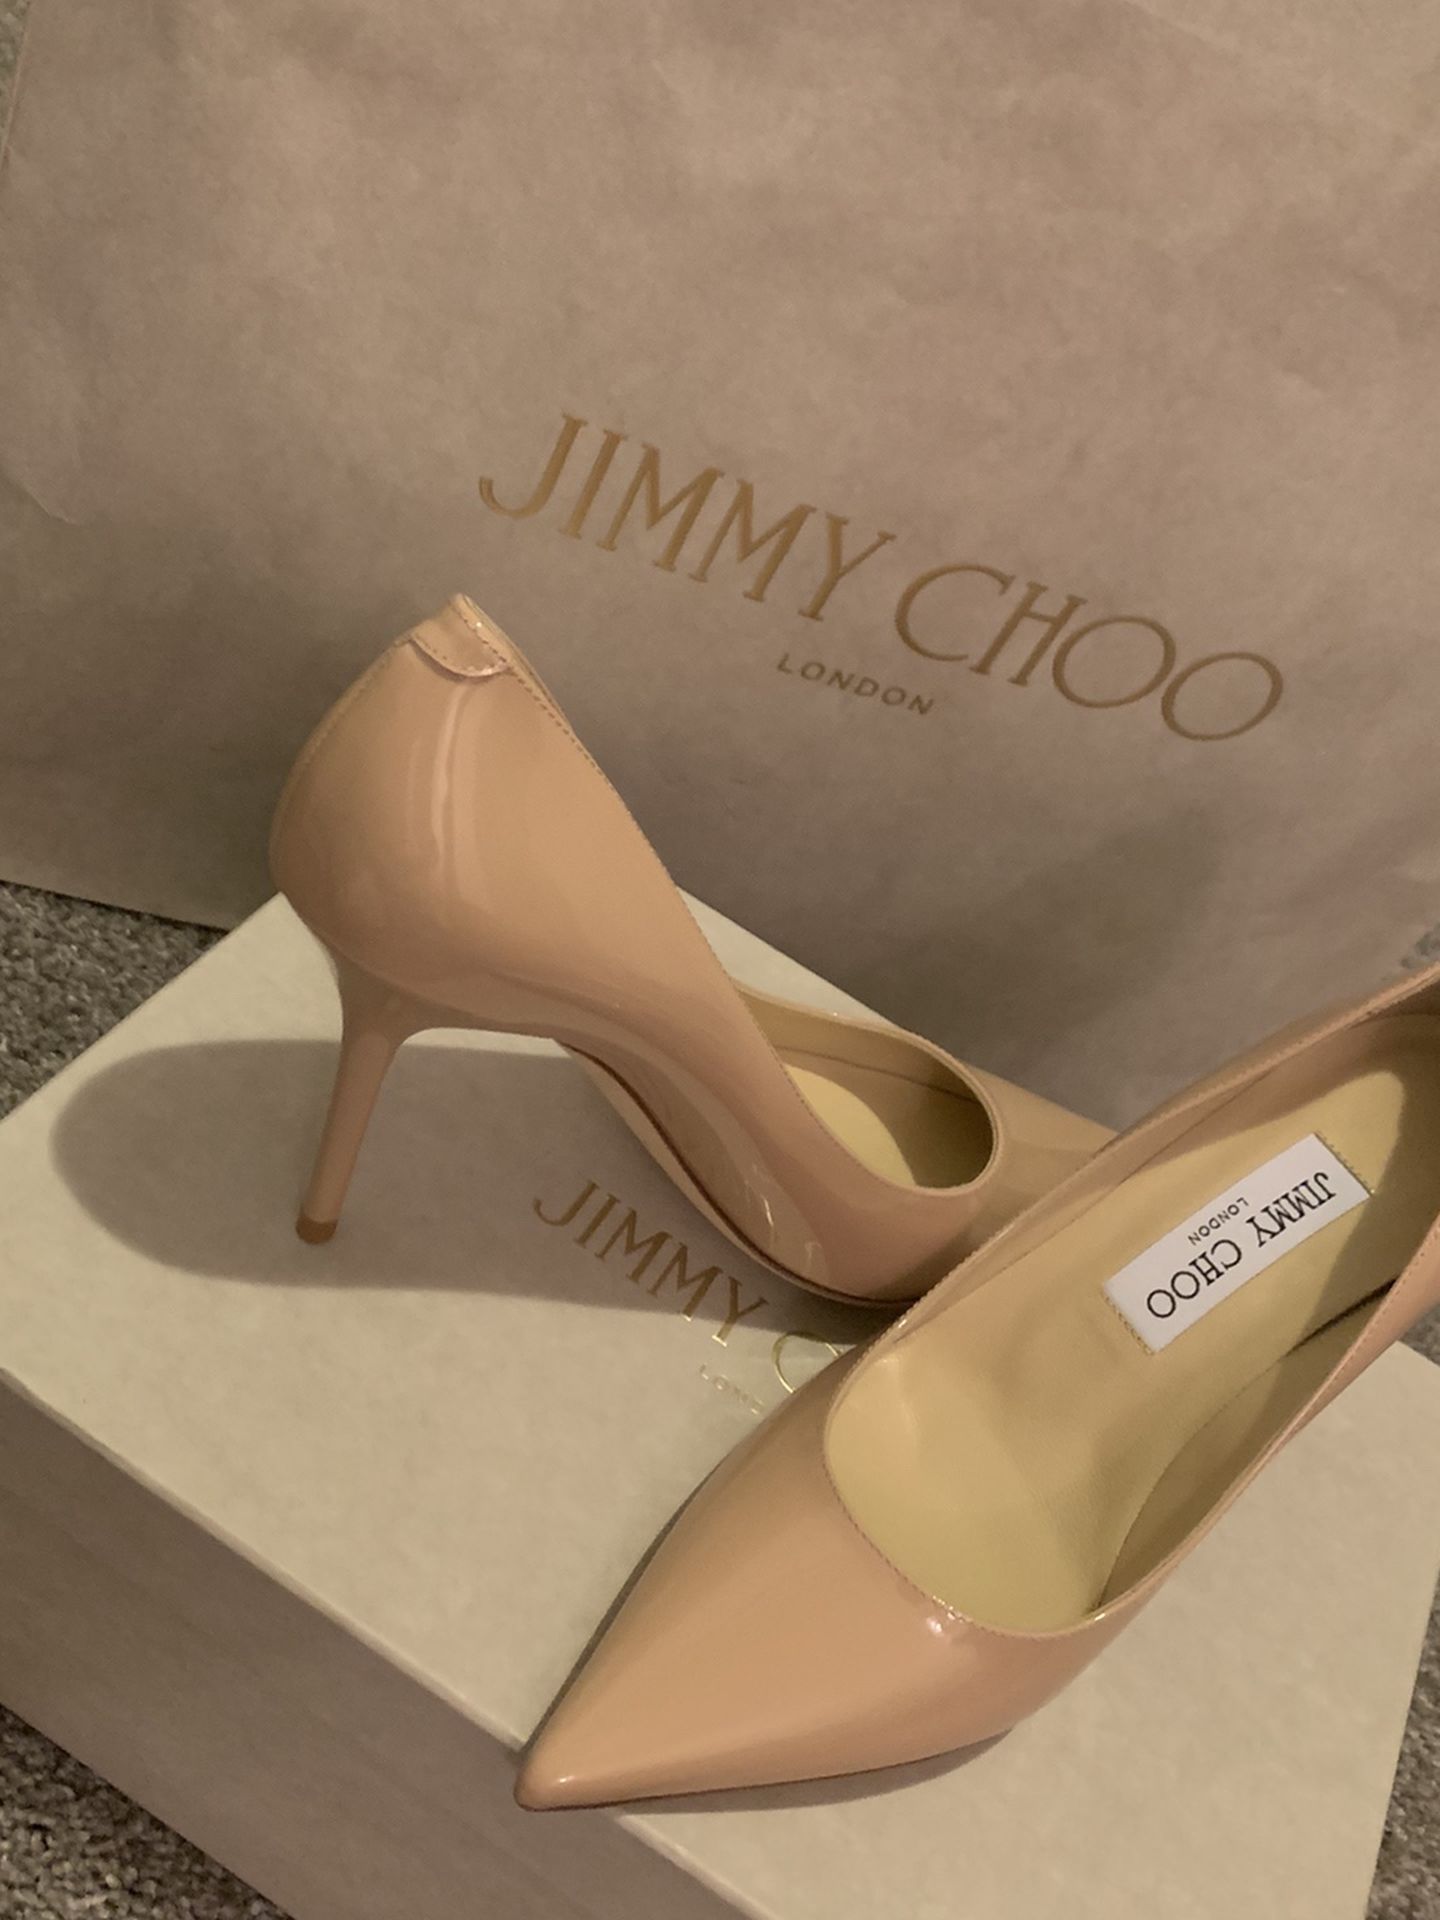 Jimmy Choo high heels new